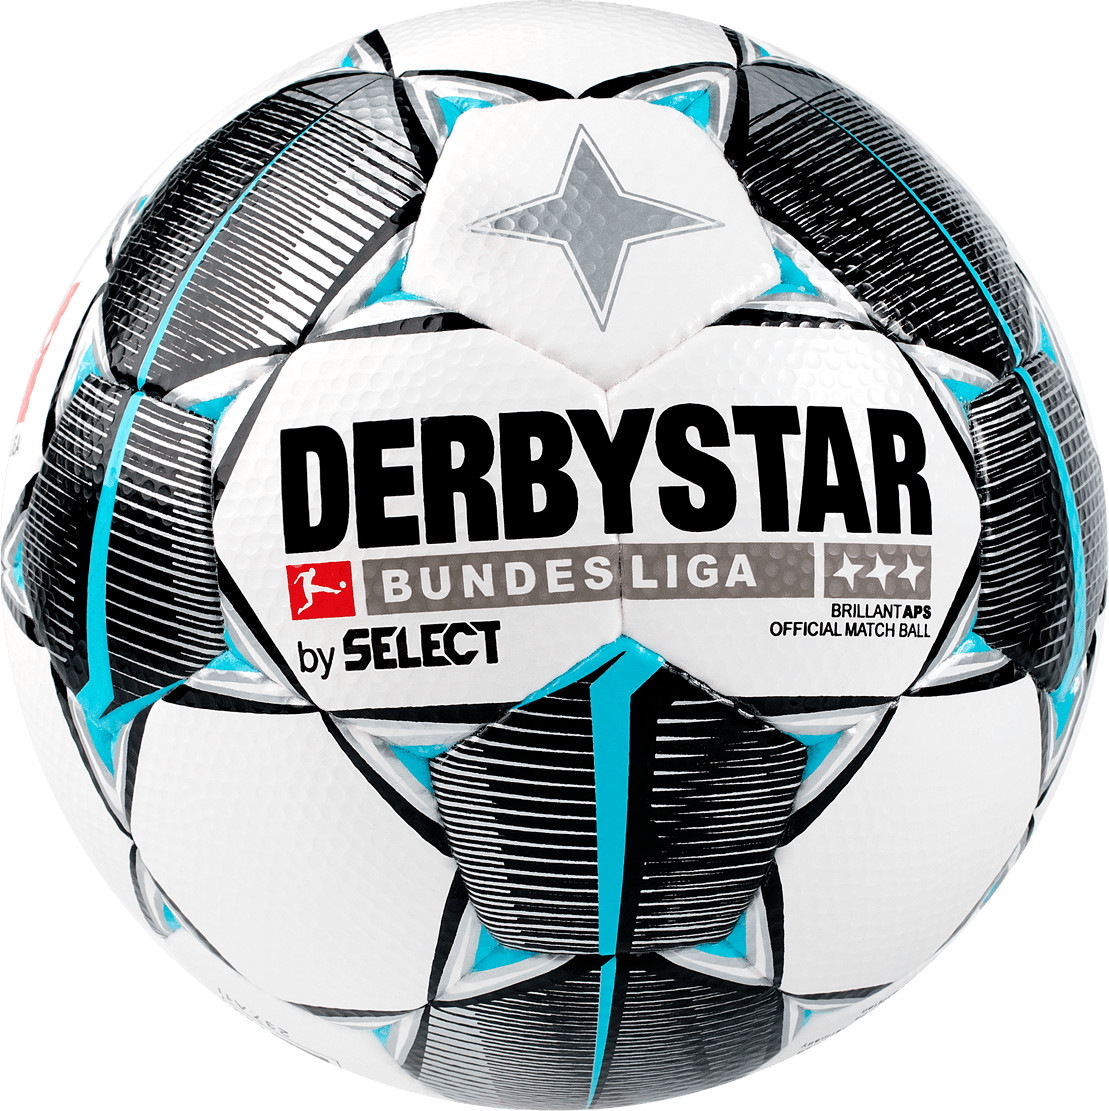 Derbystar APS ab bei Preisvergleich OMB Brillant 2019/20 139,95 | (1802500019) €